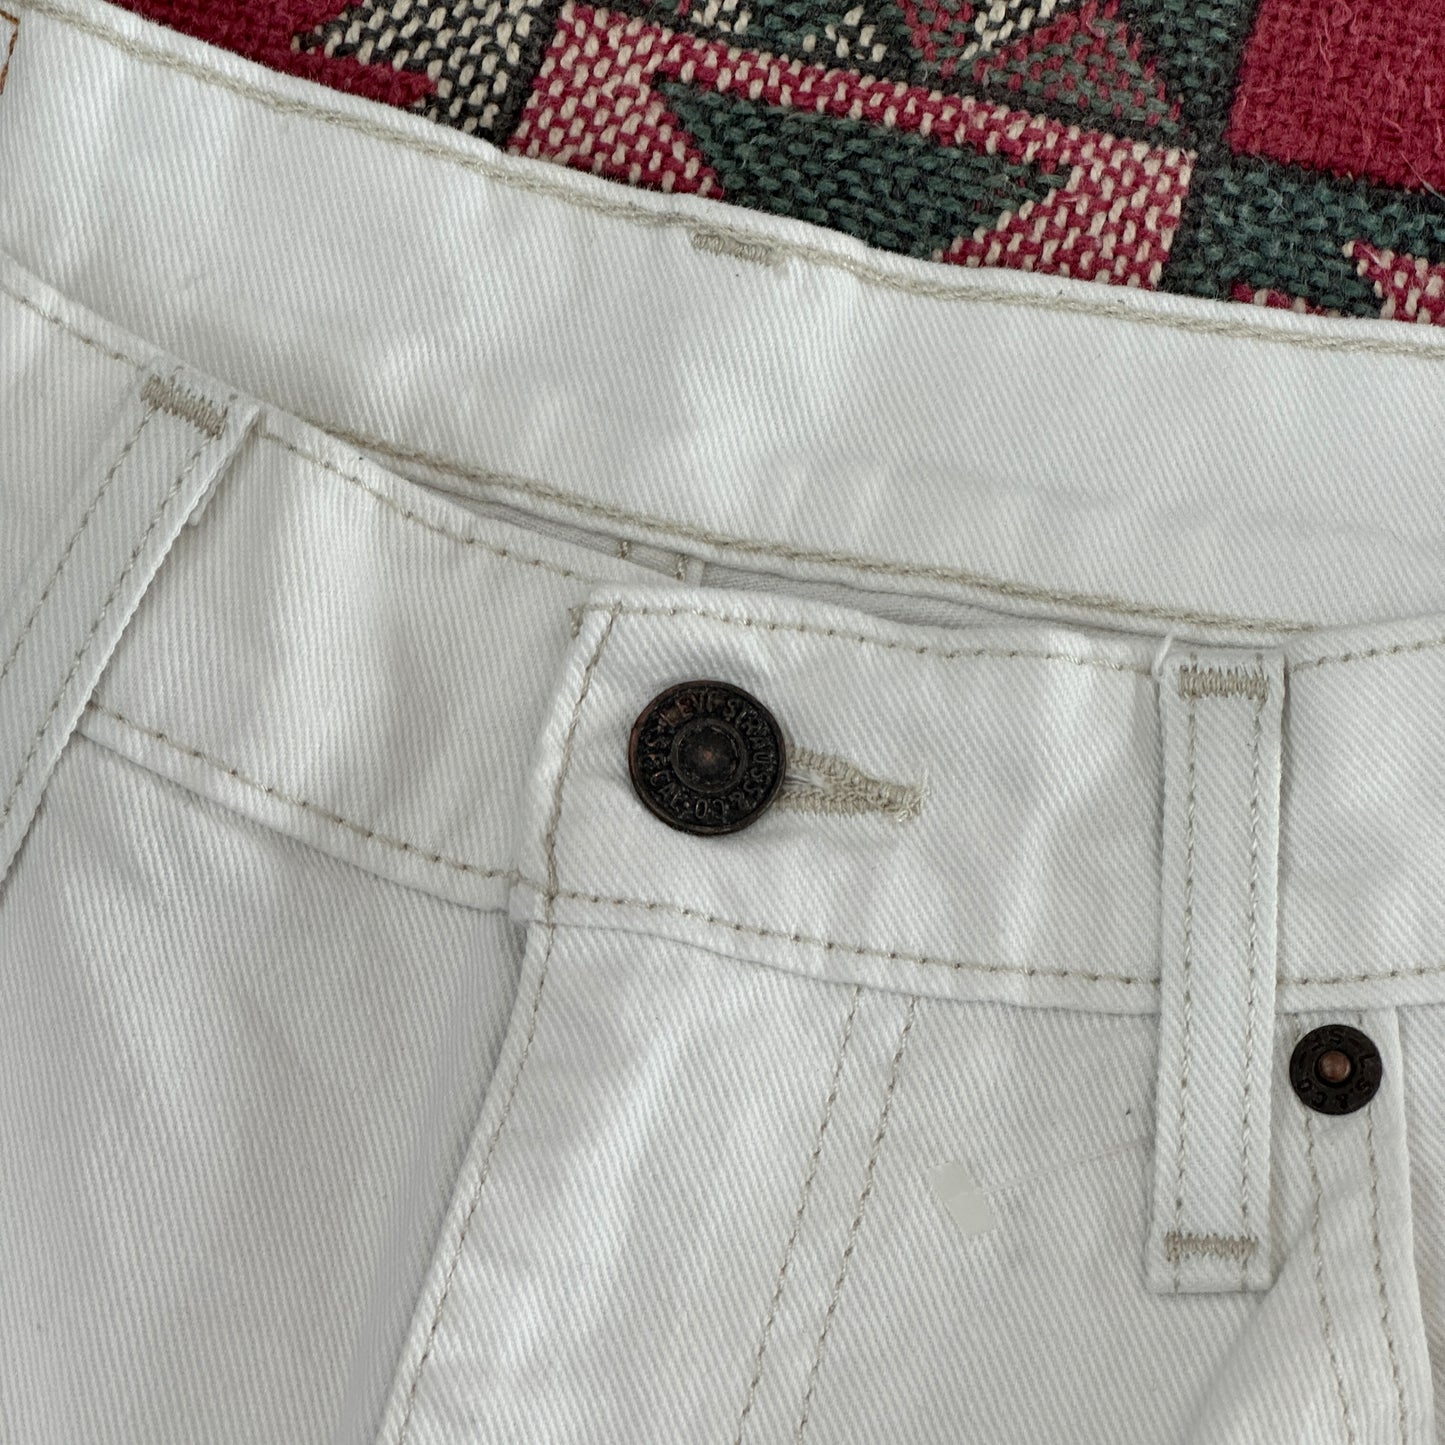 Levi's 569 White Jeans Short